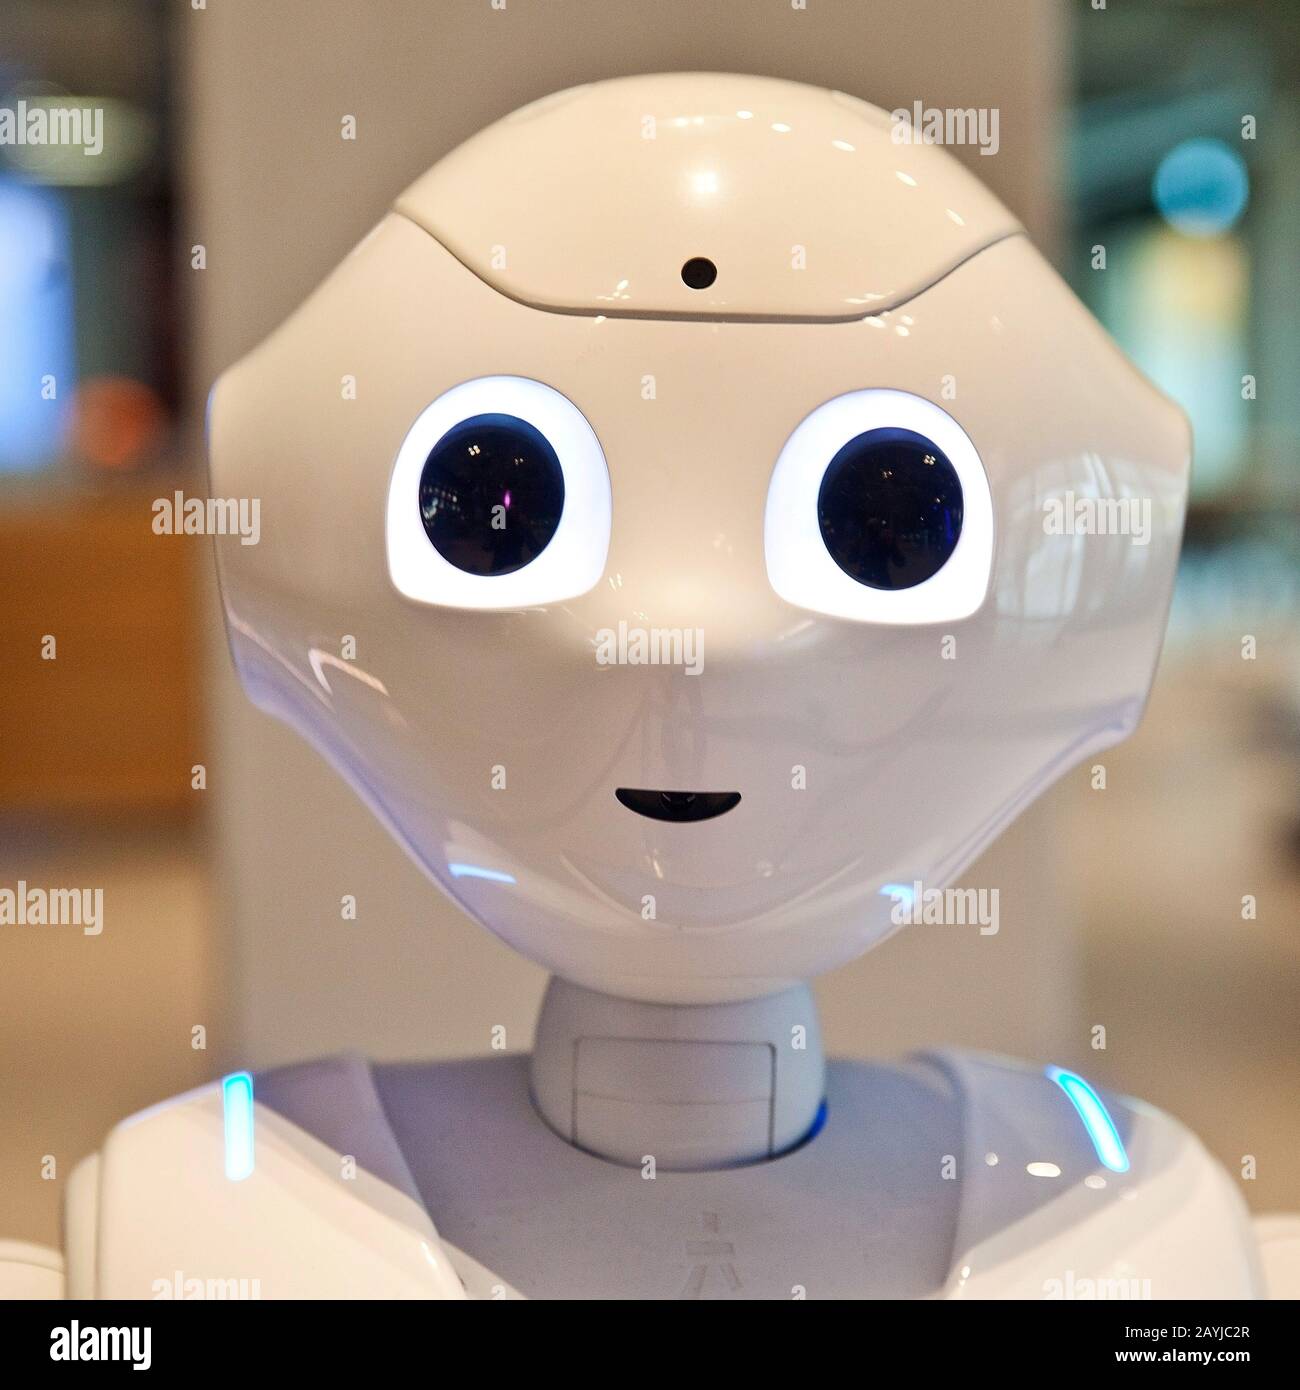 head of humanoid robot Pepper Stock Photo